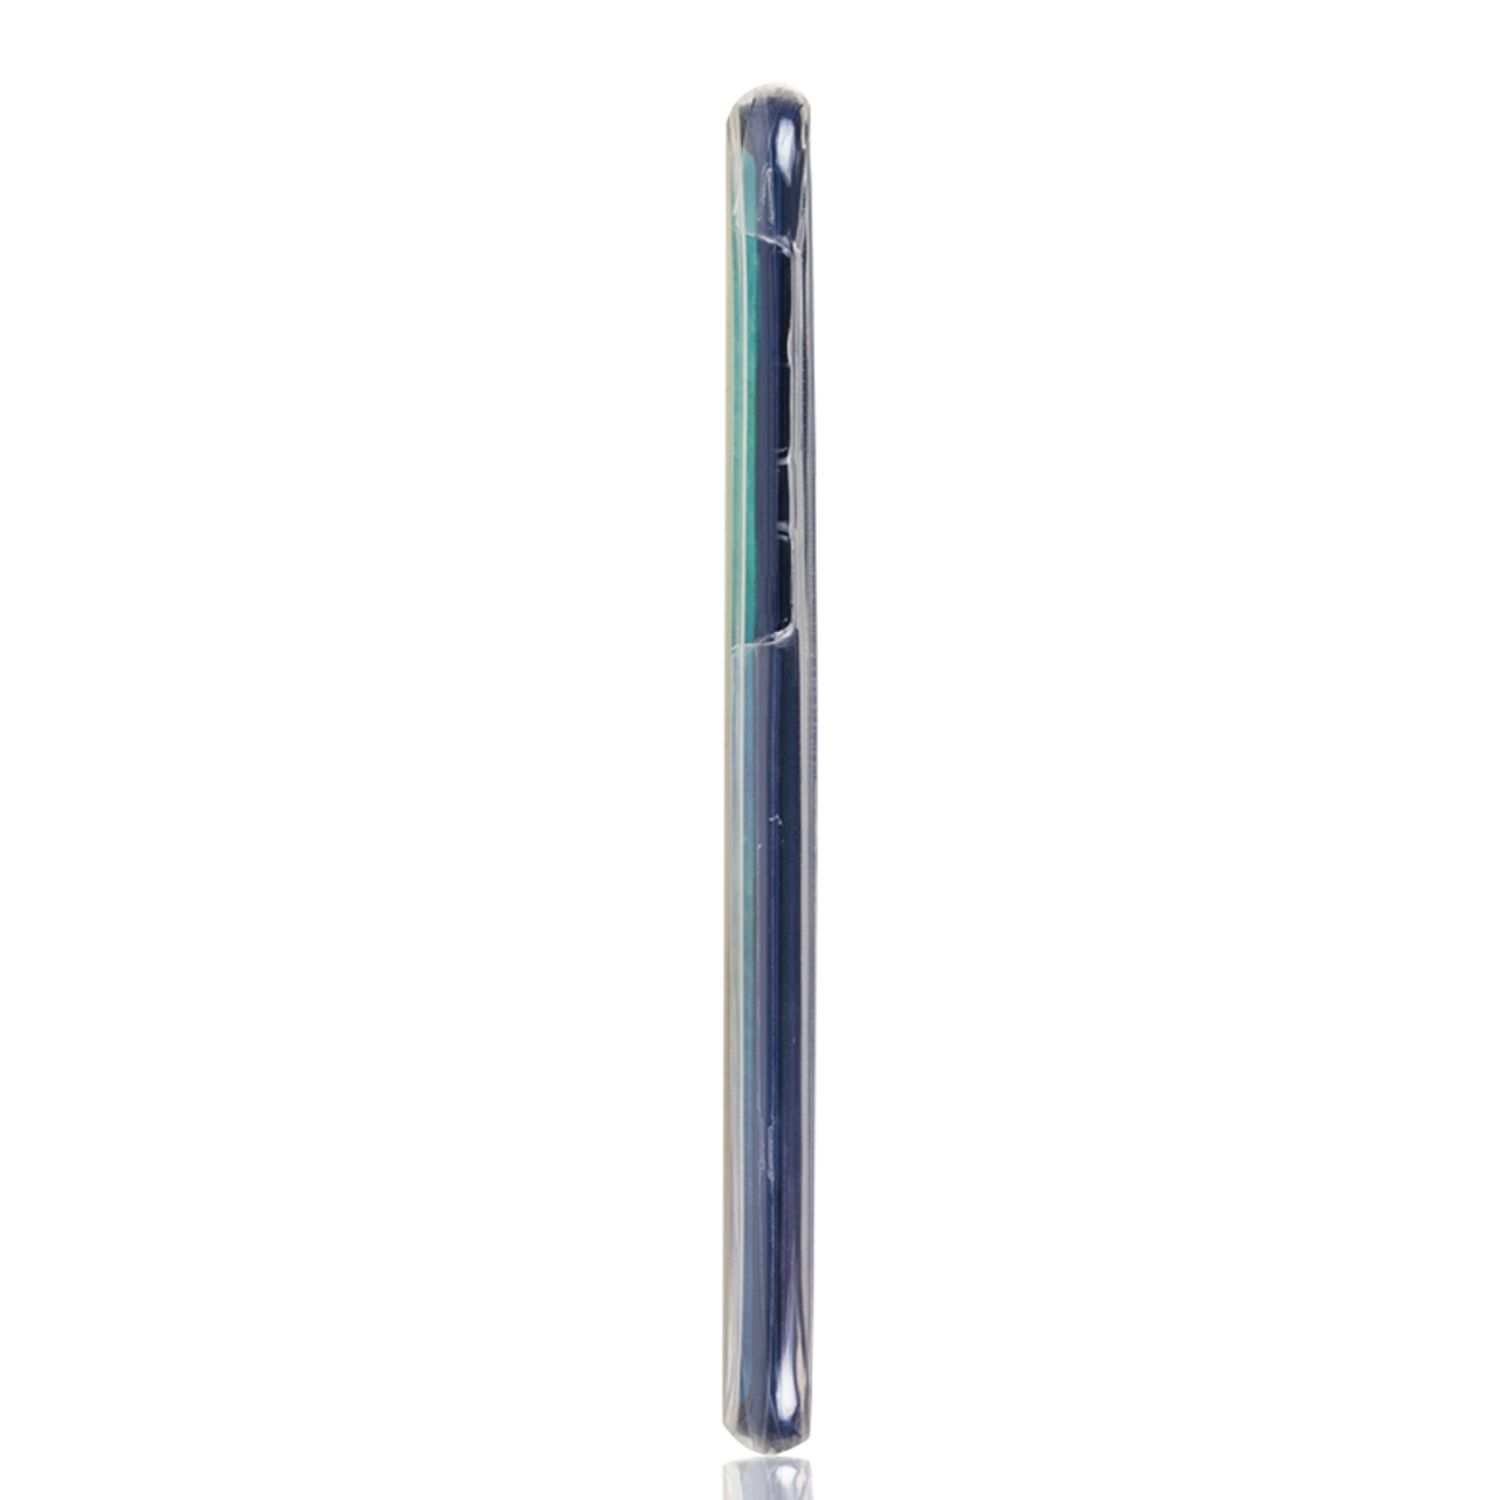 DESIGN Transparent KÖNIG Handyhülle Full Galaxy Samsung, Full-Cover Grad, M40, Cover, 360